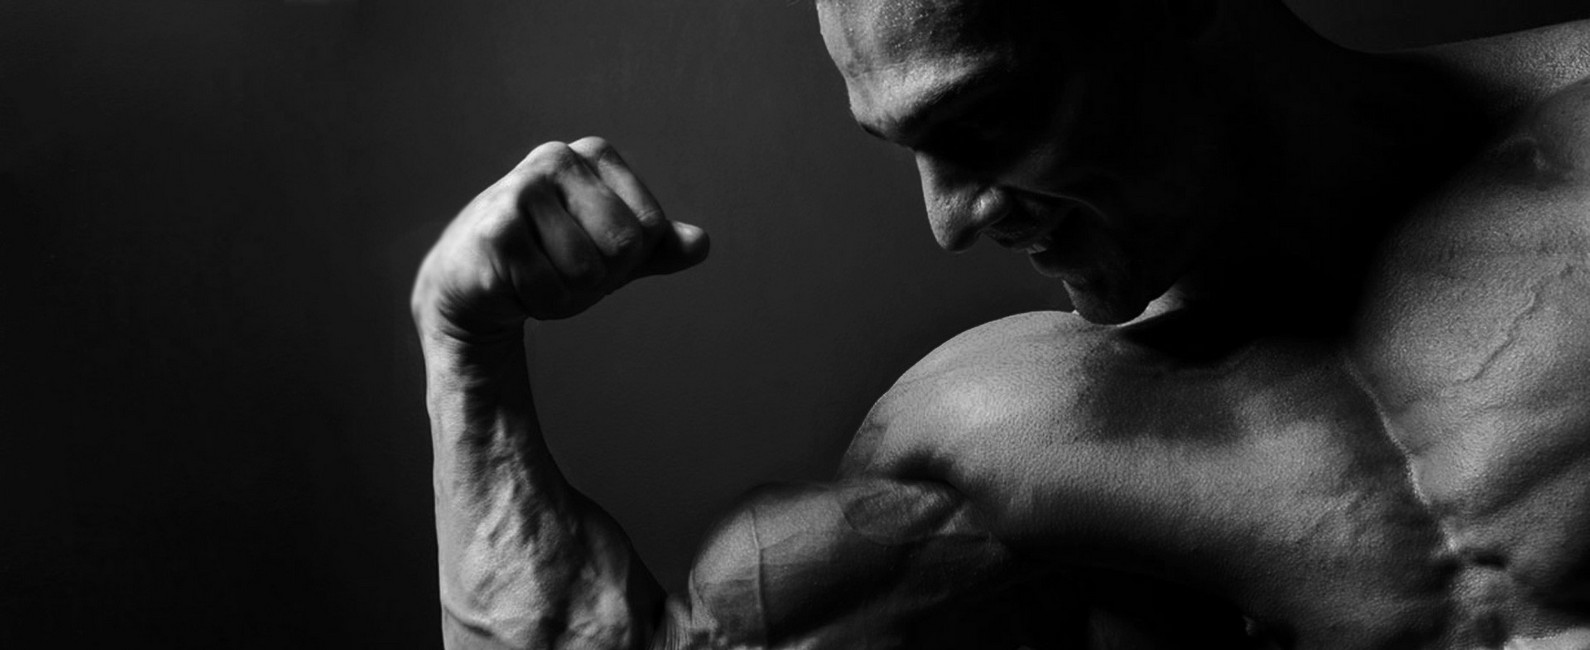 Hgh supplements bodybuilding